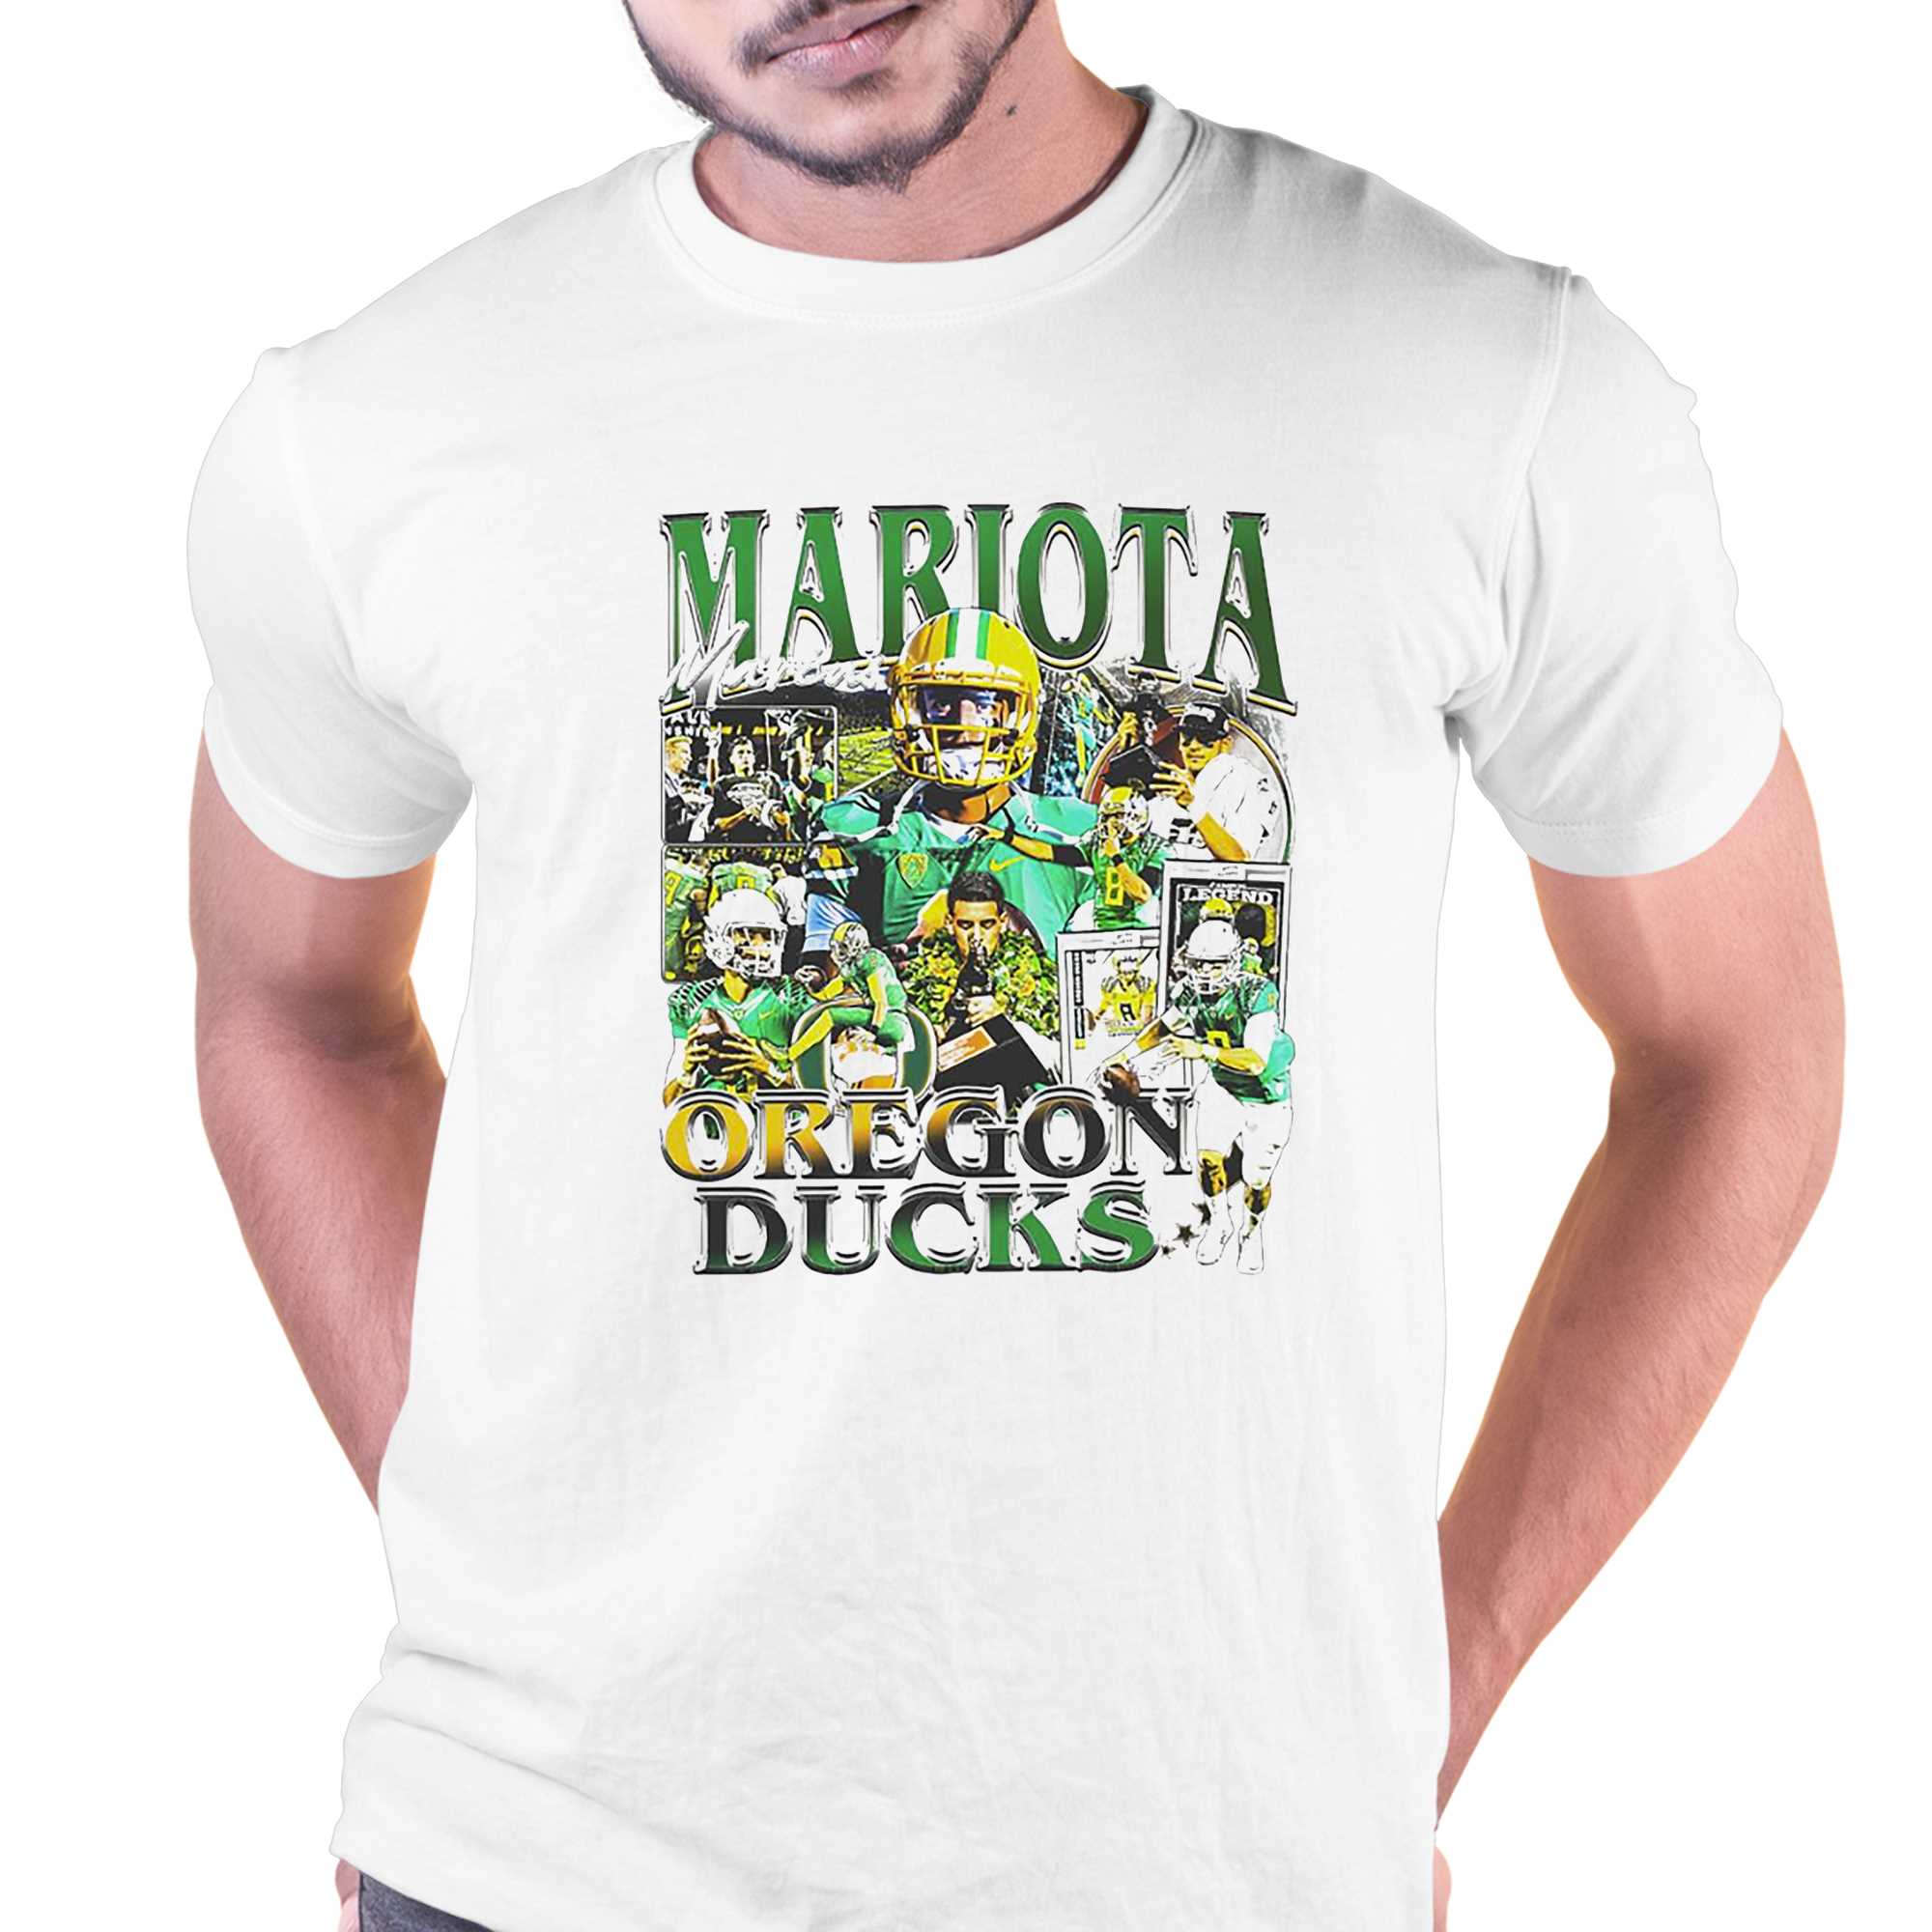 Marcus Mariota Oregon Ducks Football Shirt - Shibtee Clothing